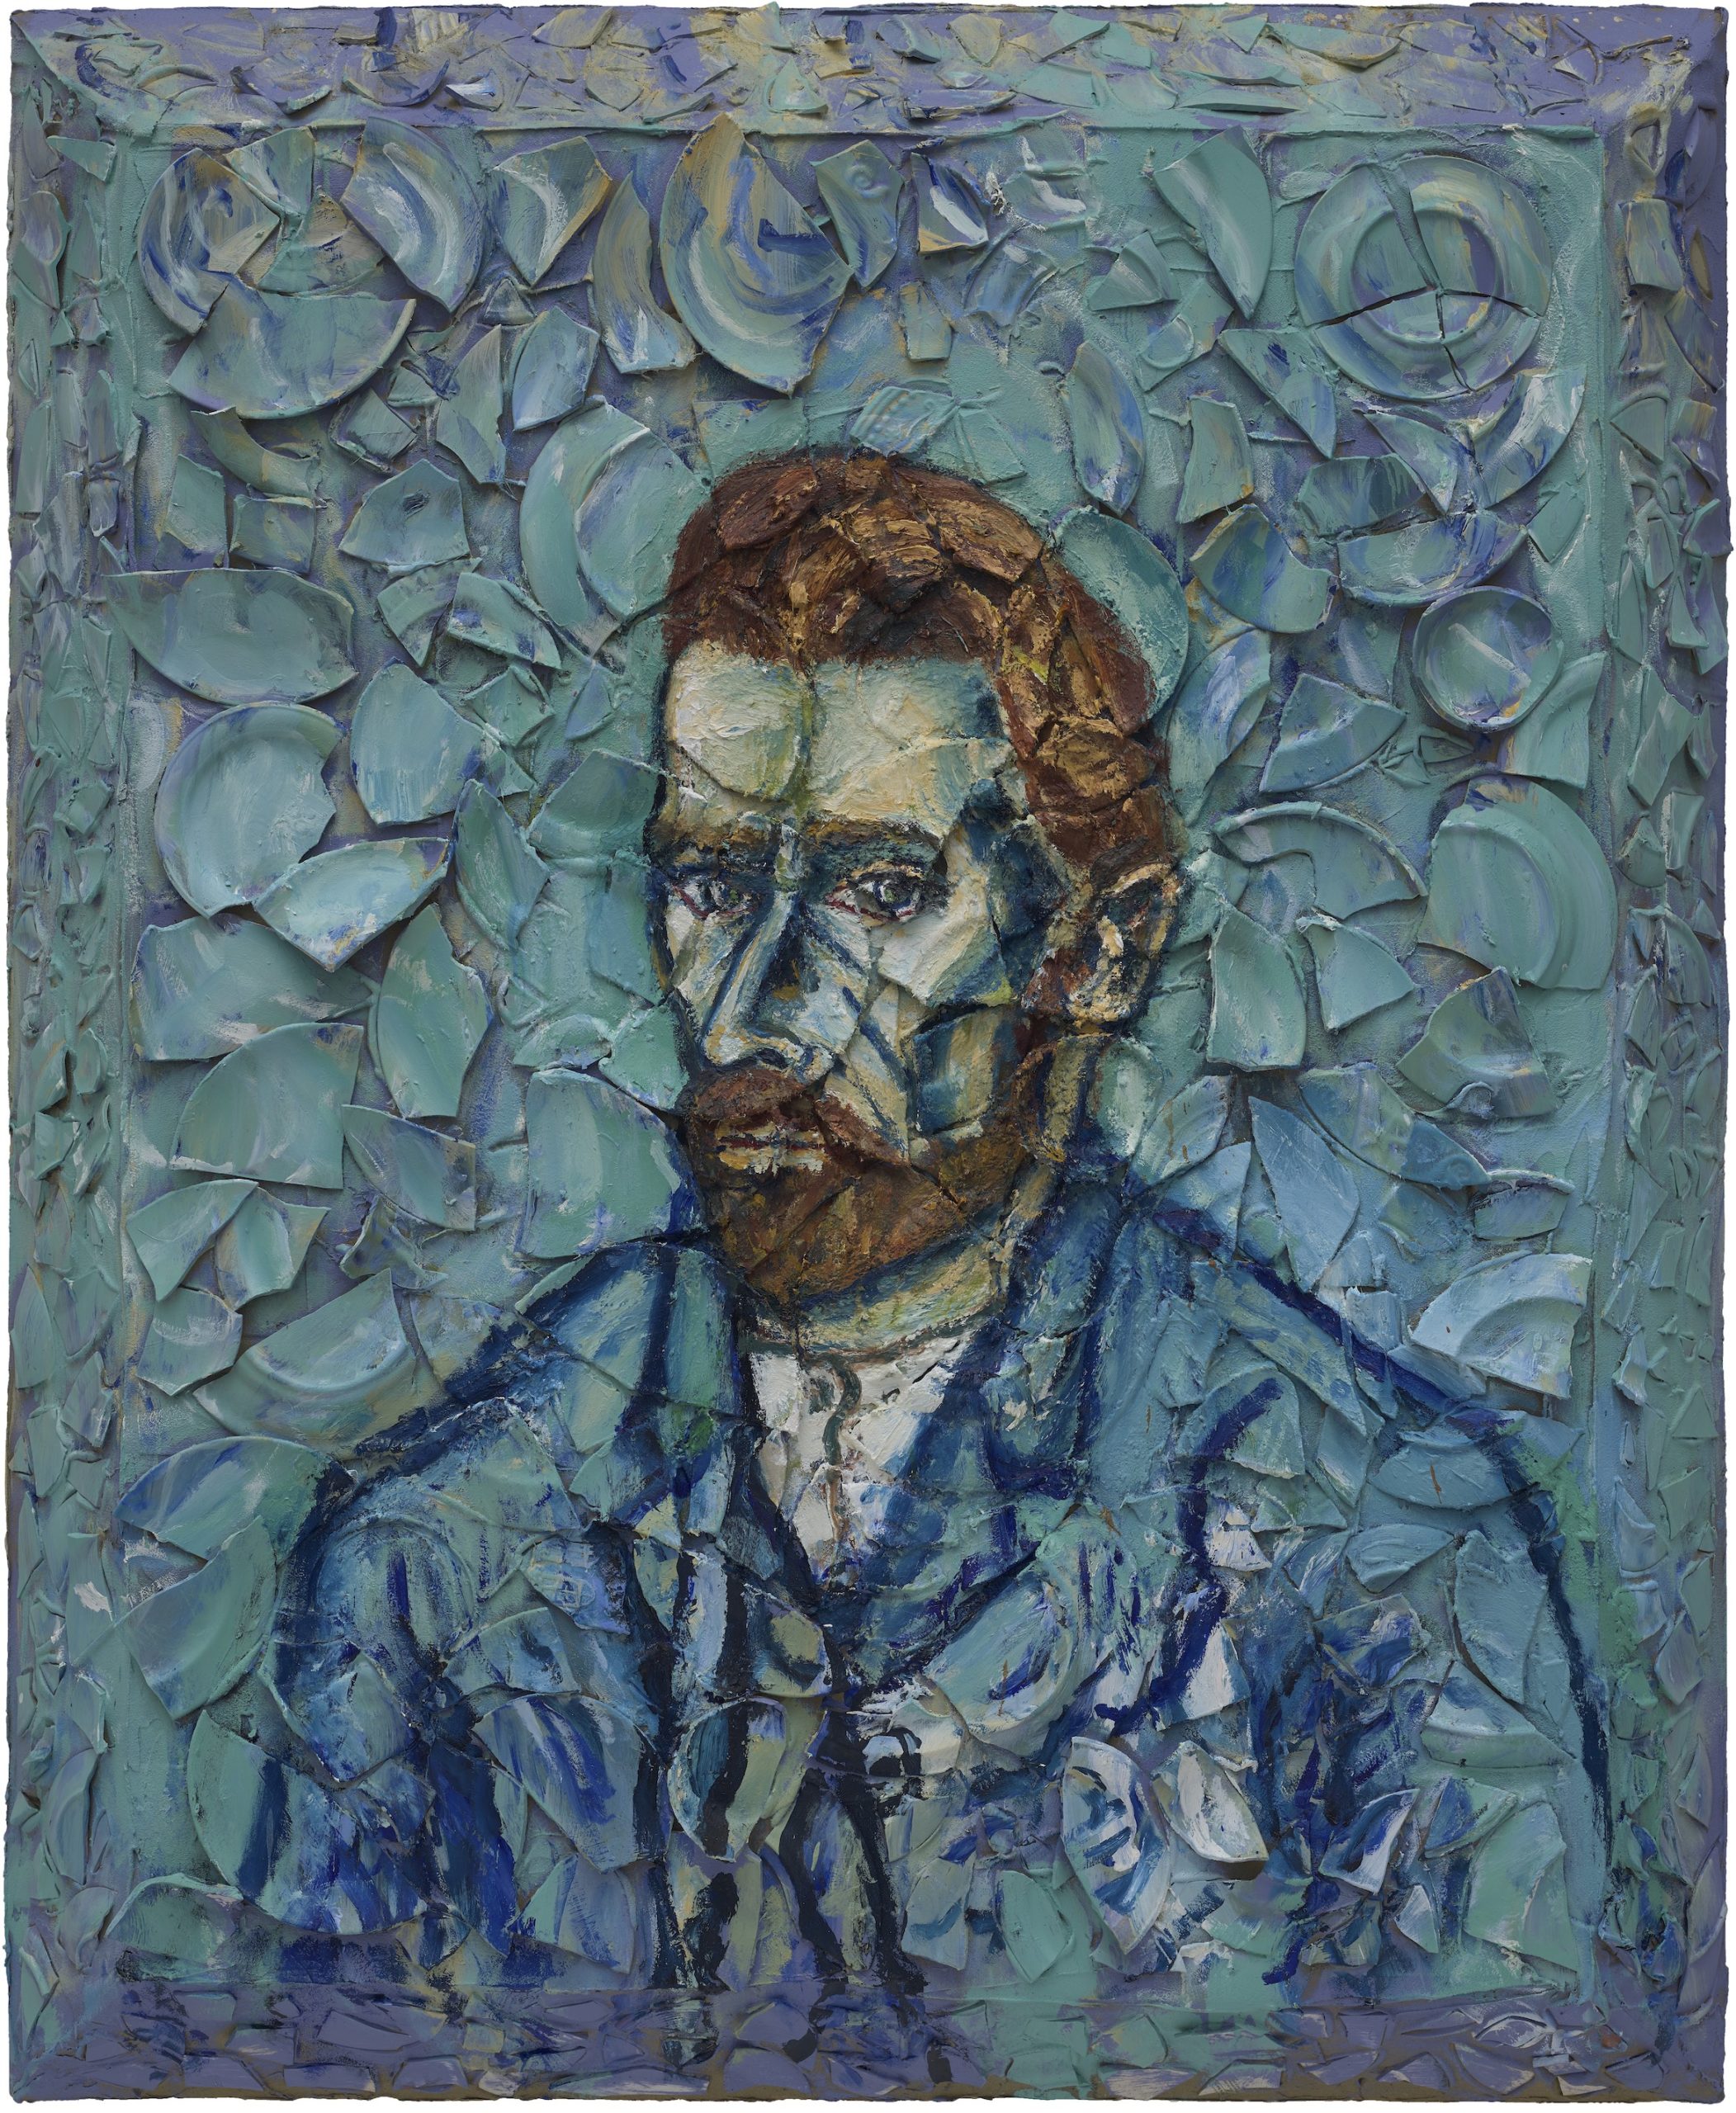 Number 2 (Van Gogh Self-Portrait Musee d'Orsay, Willem), 2019
